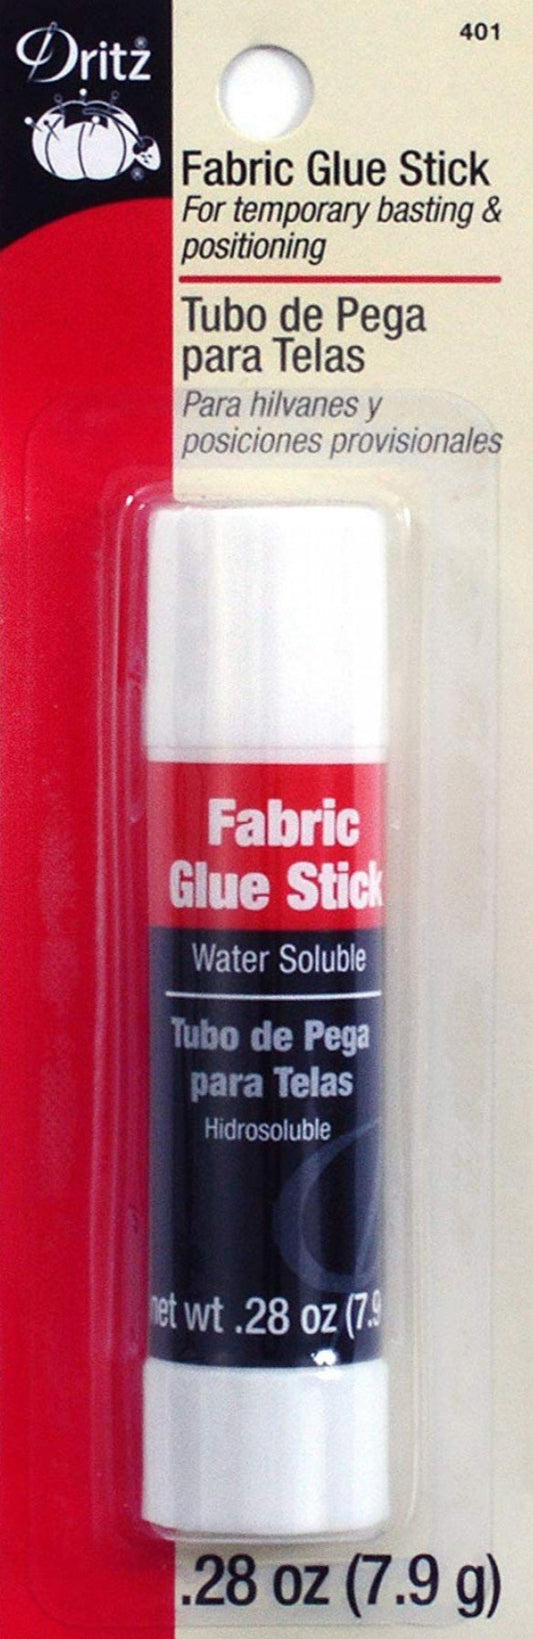 Fabric Glue Stick Notion - Trapunto